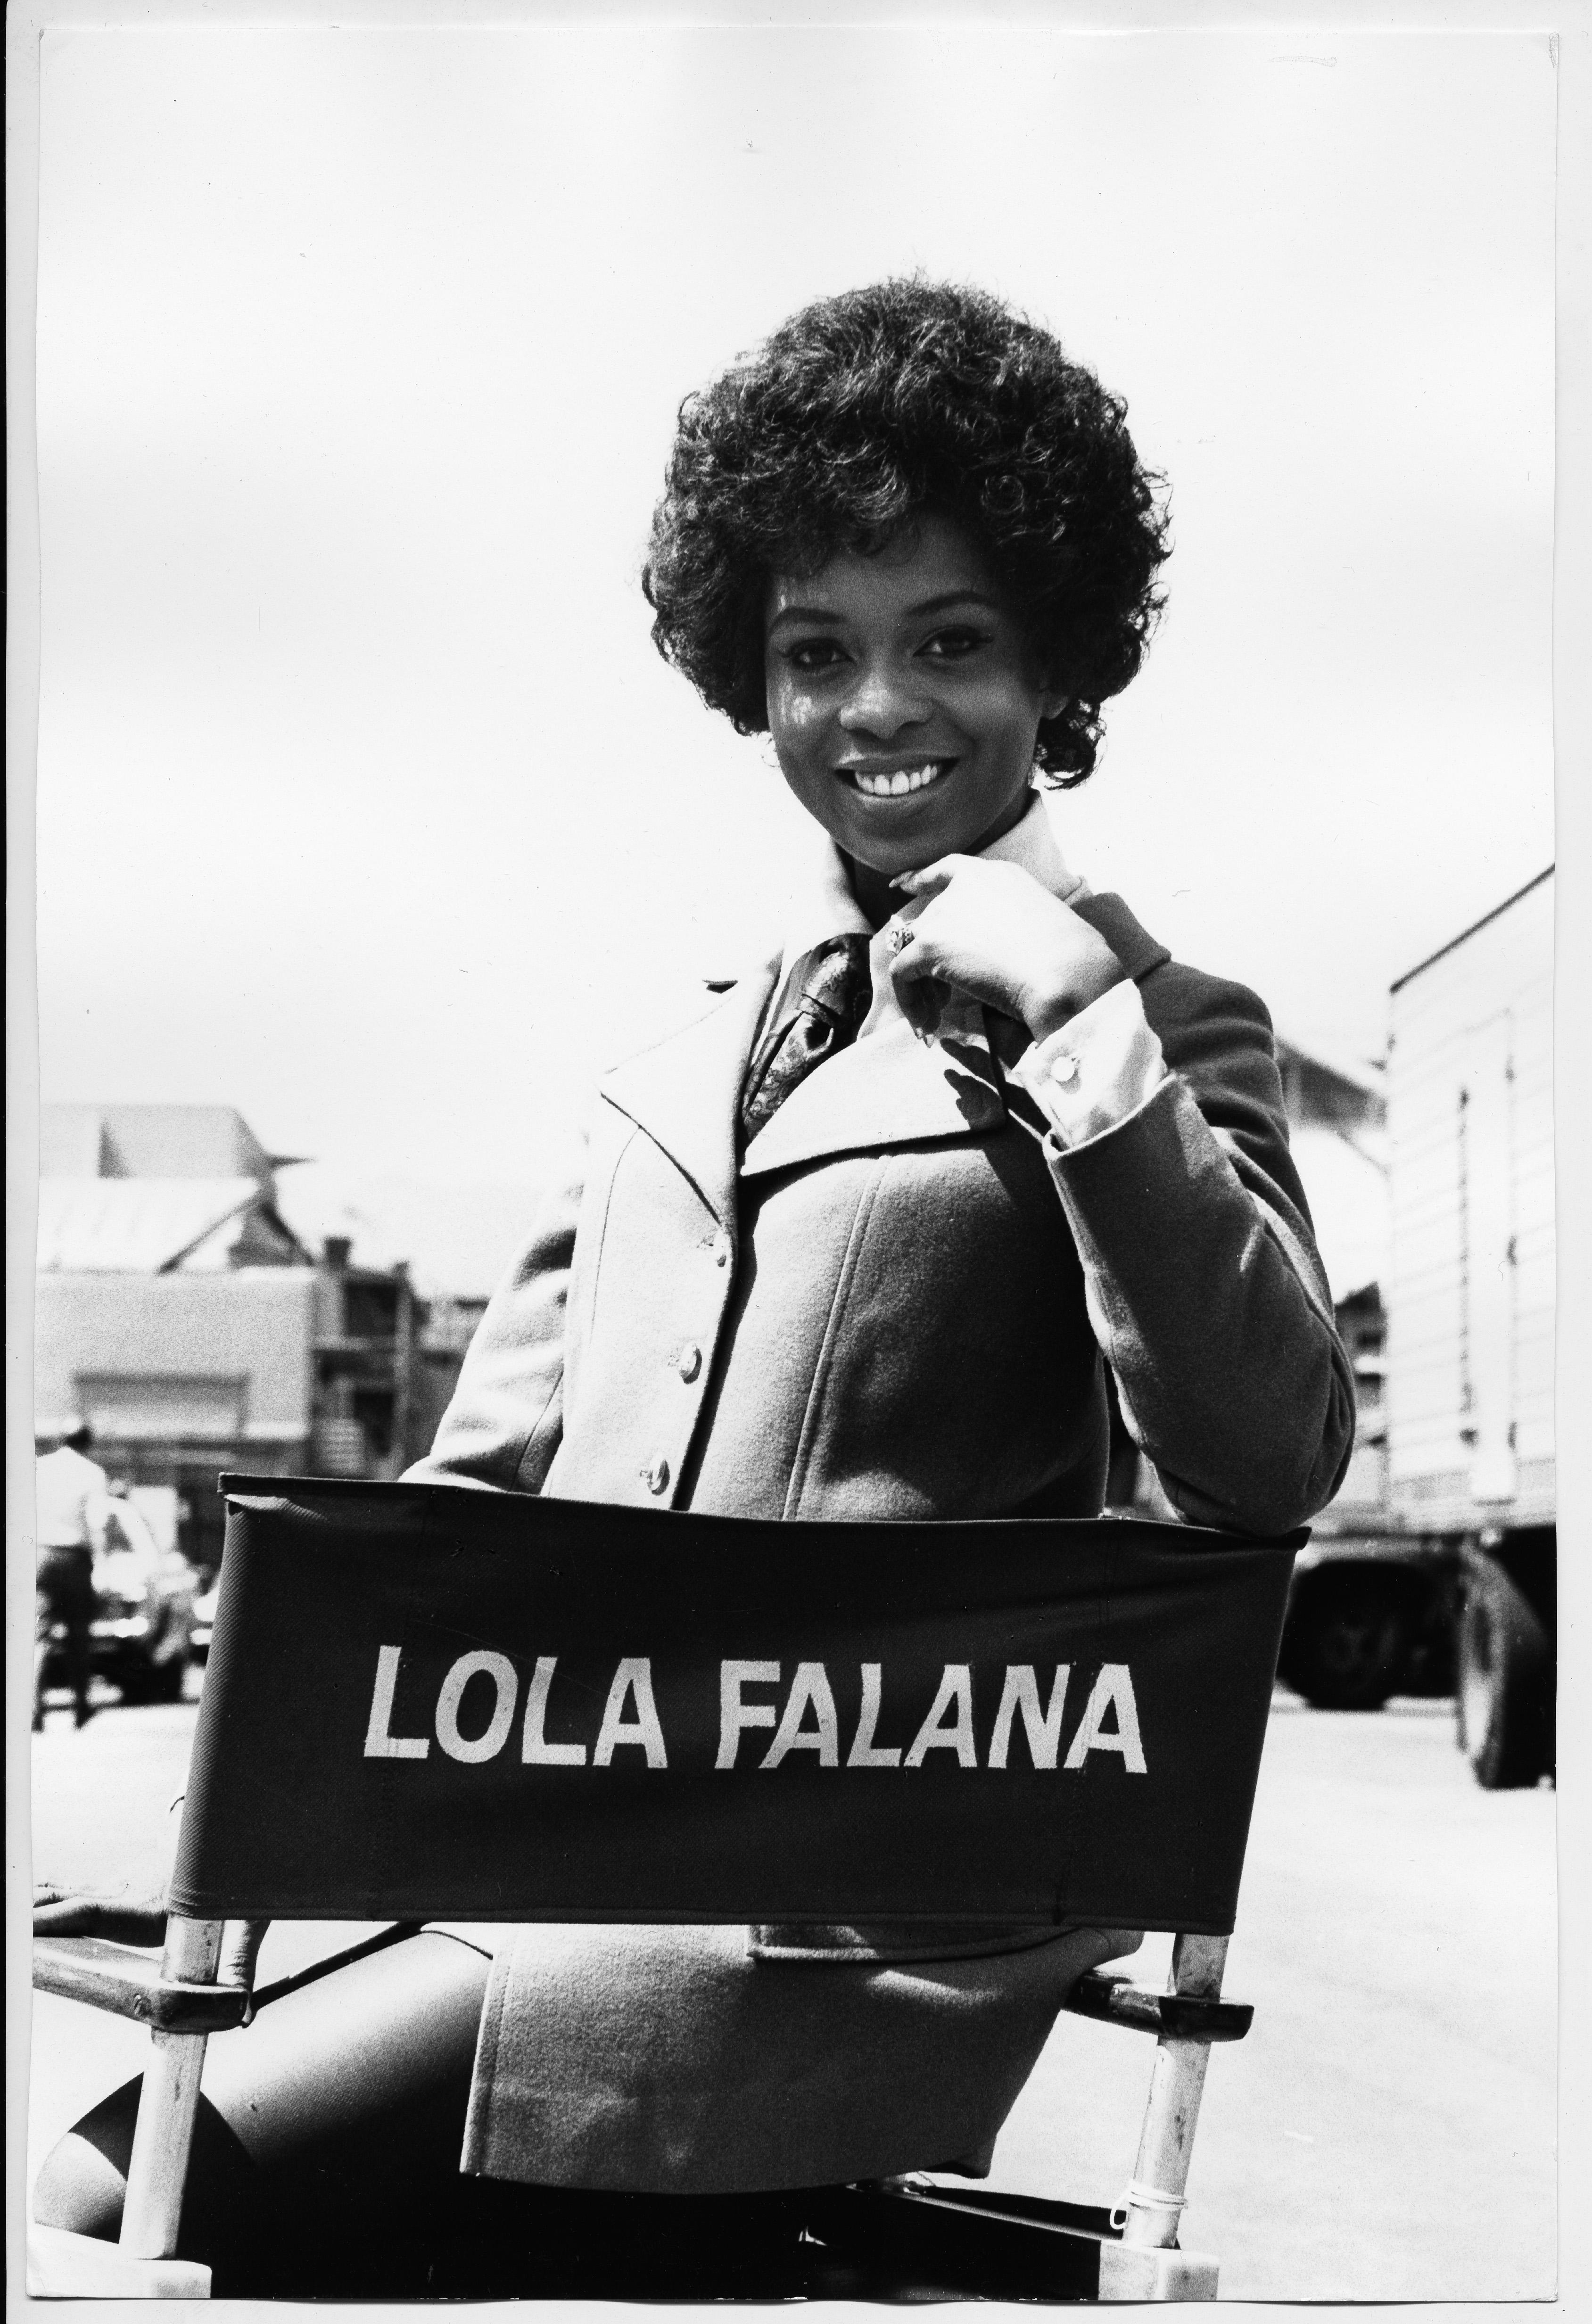 Lola Falana on the Set photographed by Frank Dandridge, 1969.